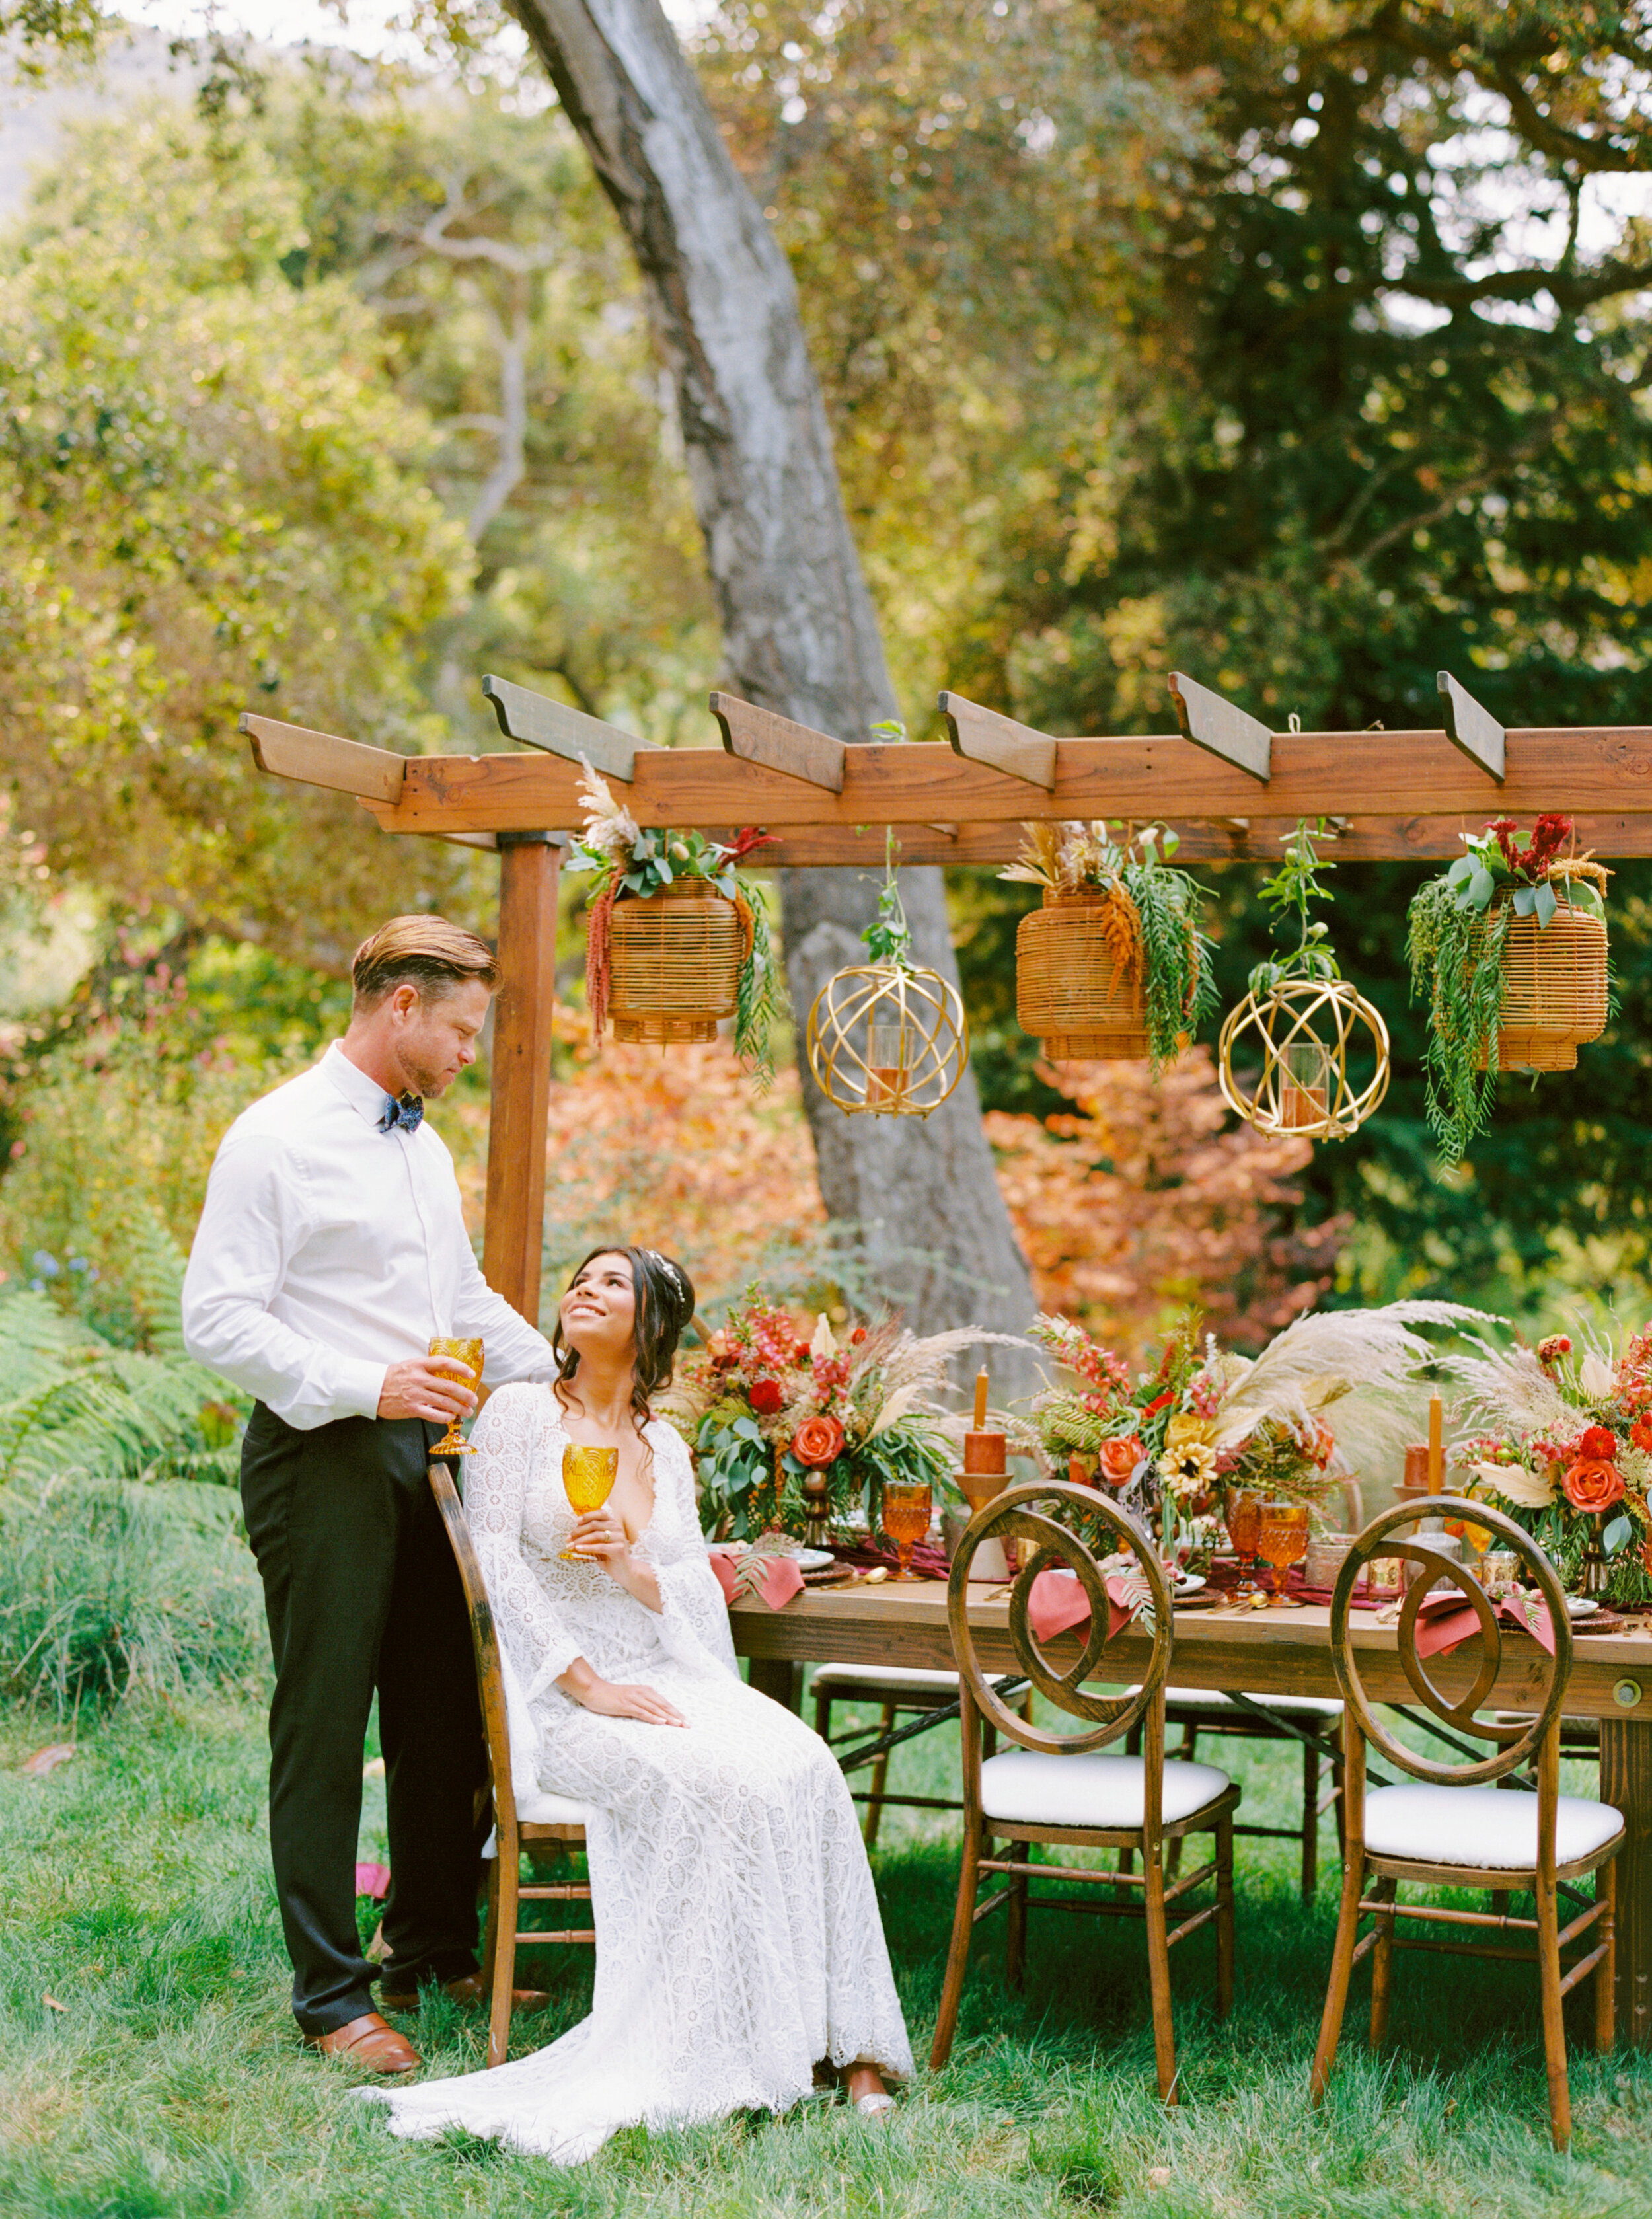 Sarahi Hadden - An Earthy Summer Boho Inspired Wedding with Sunset Hues at Gardener Ranch-70.jpg